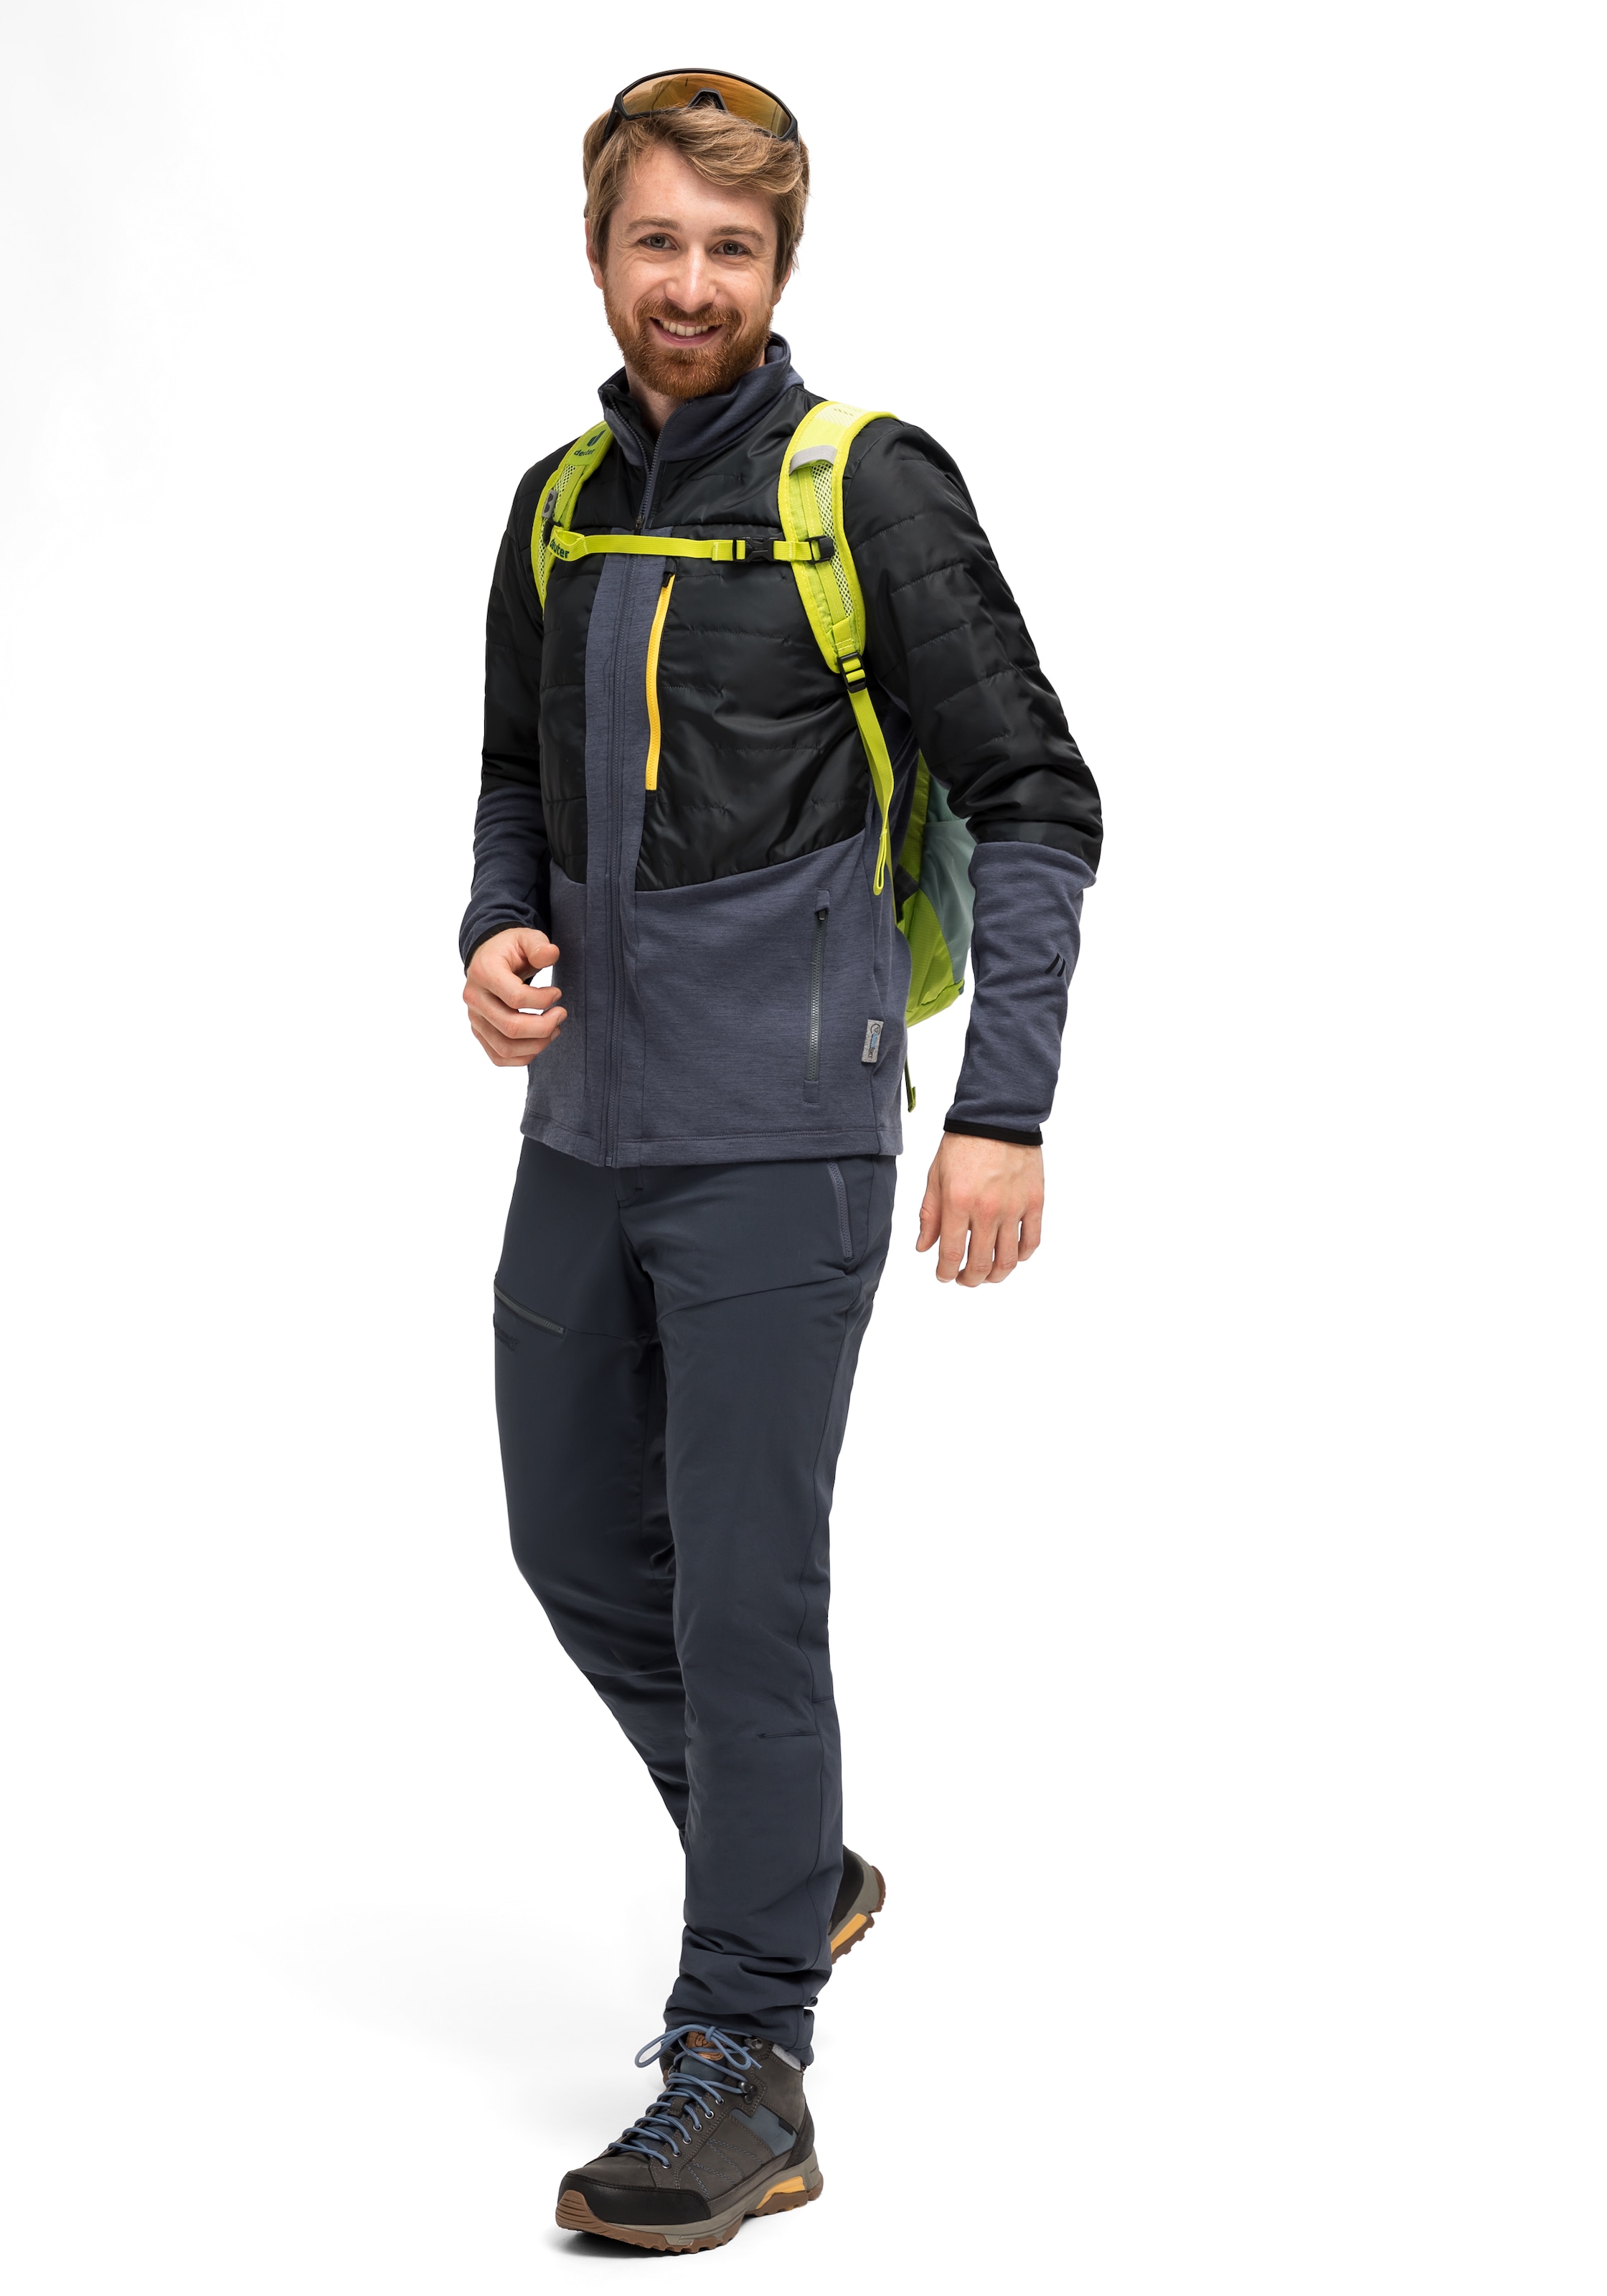 Maier Sports Outdoorjacke »Lanus M«, Herren Wanderjacke wattiert,  atmungsaktive Trekking-Jacke mit 3 Taschen online bestellen bei OTTO